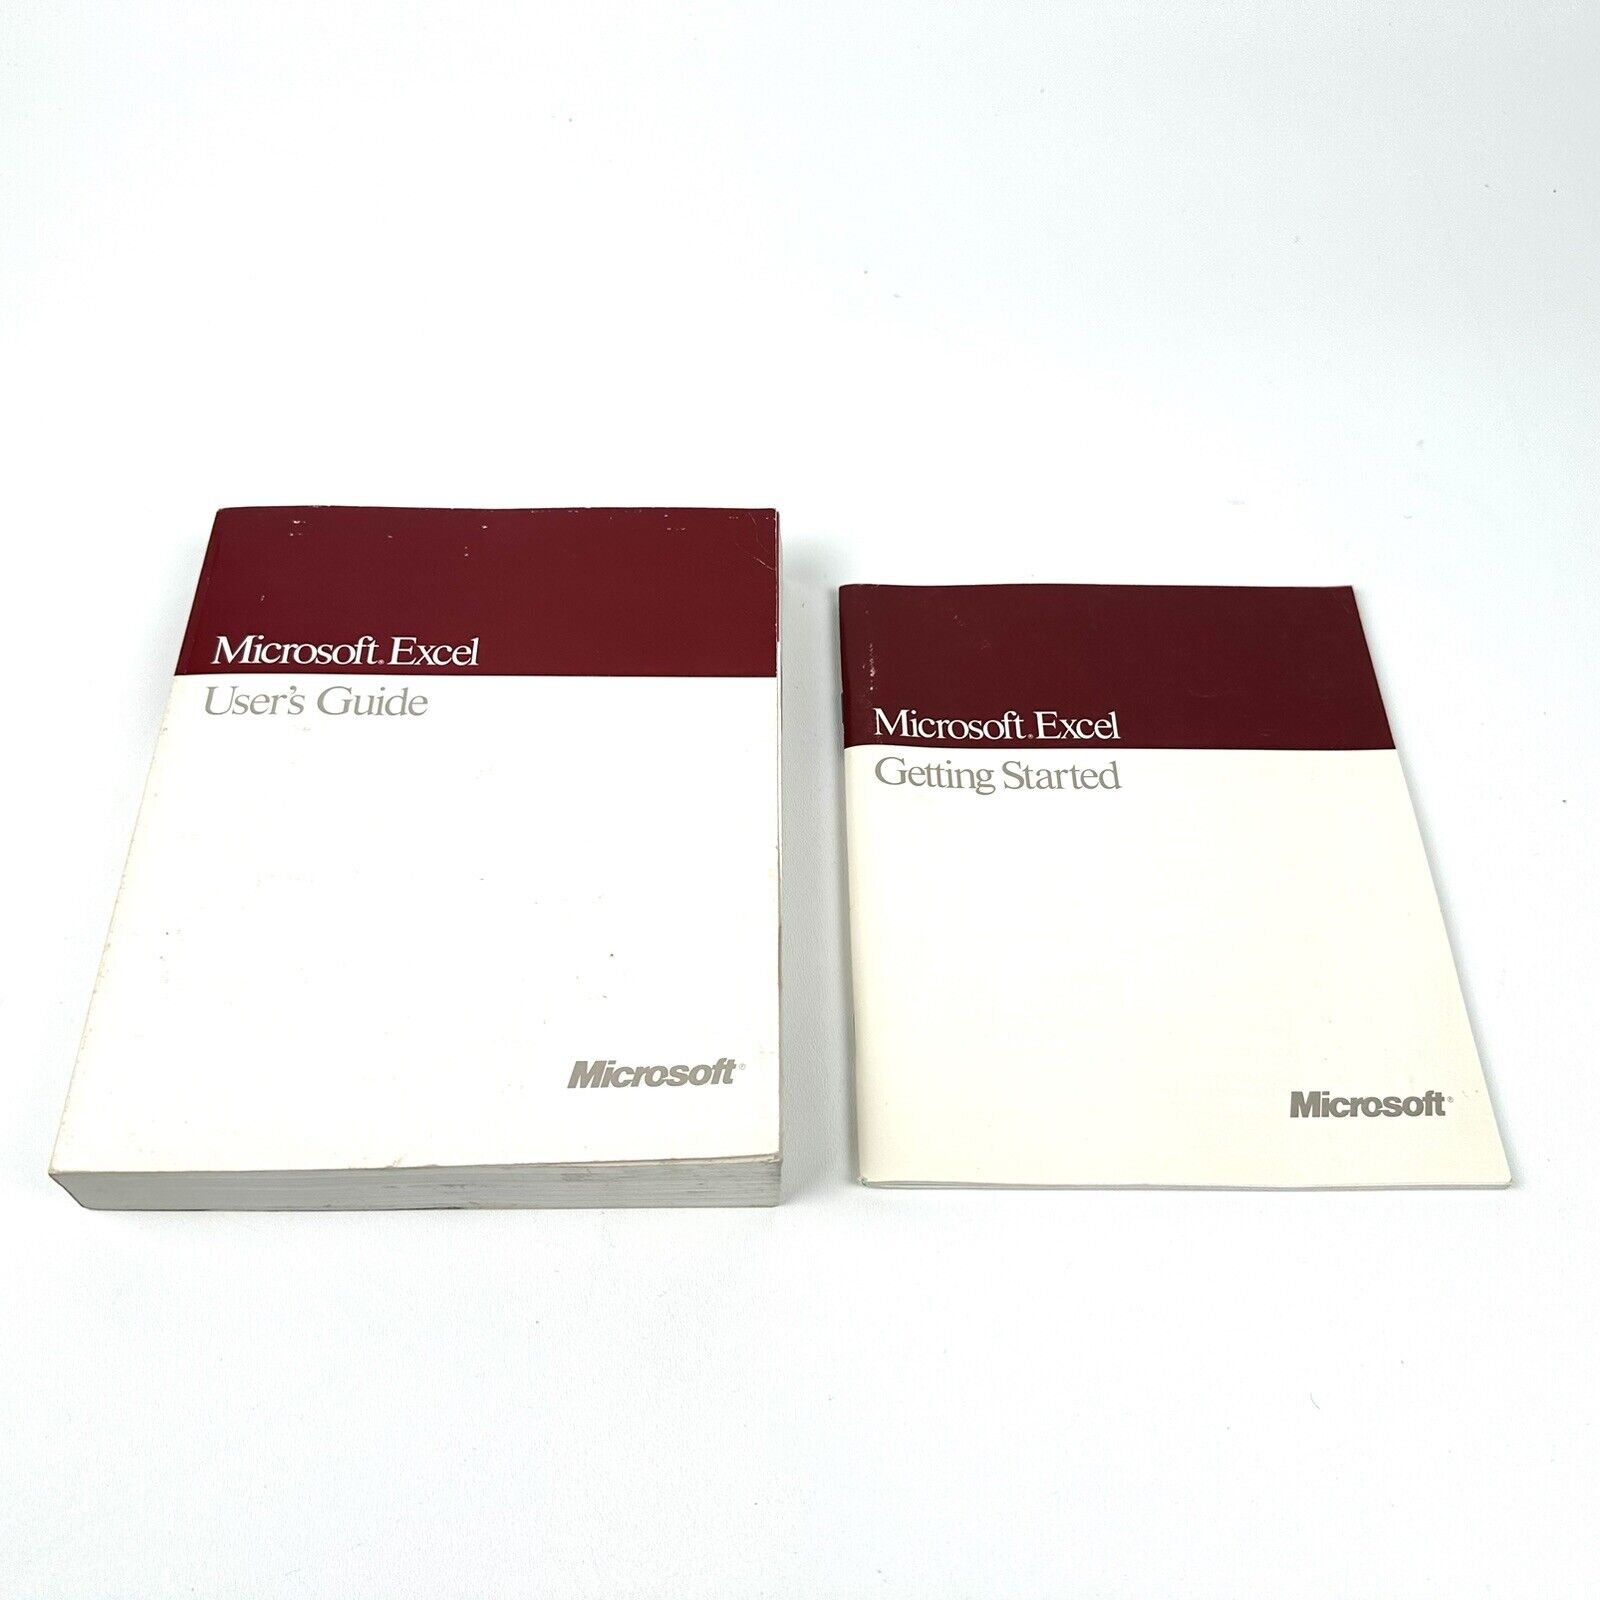 Microsoft Excel Software Manual For The Macintosh V3.0 - Vintage